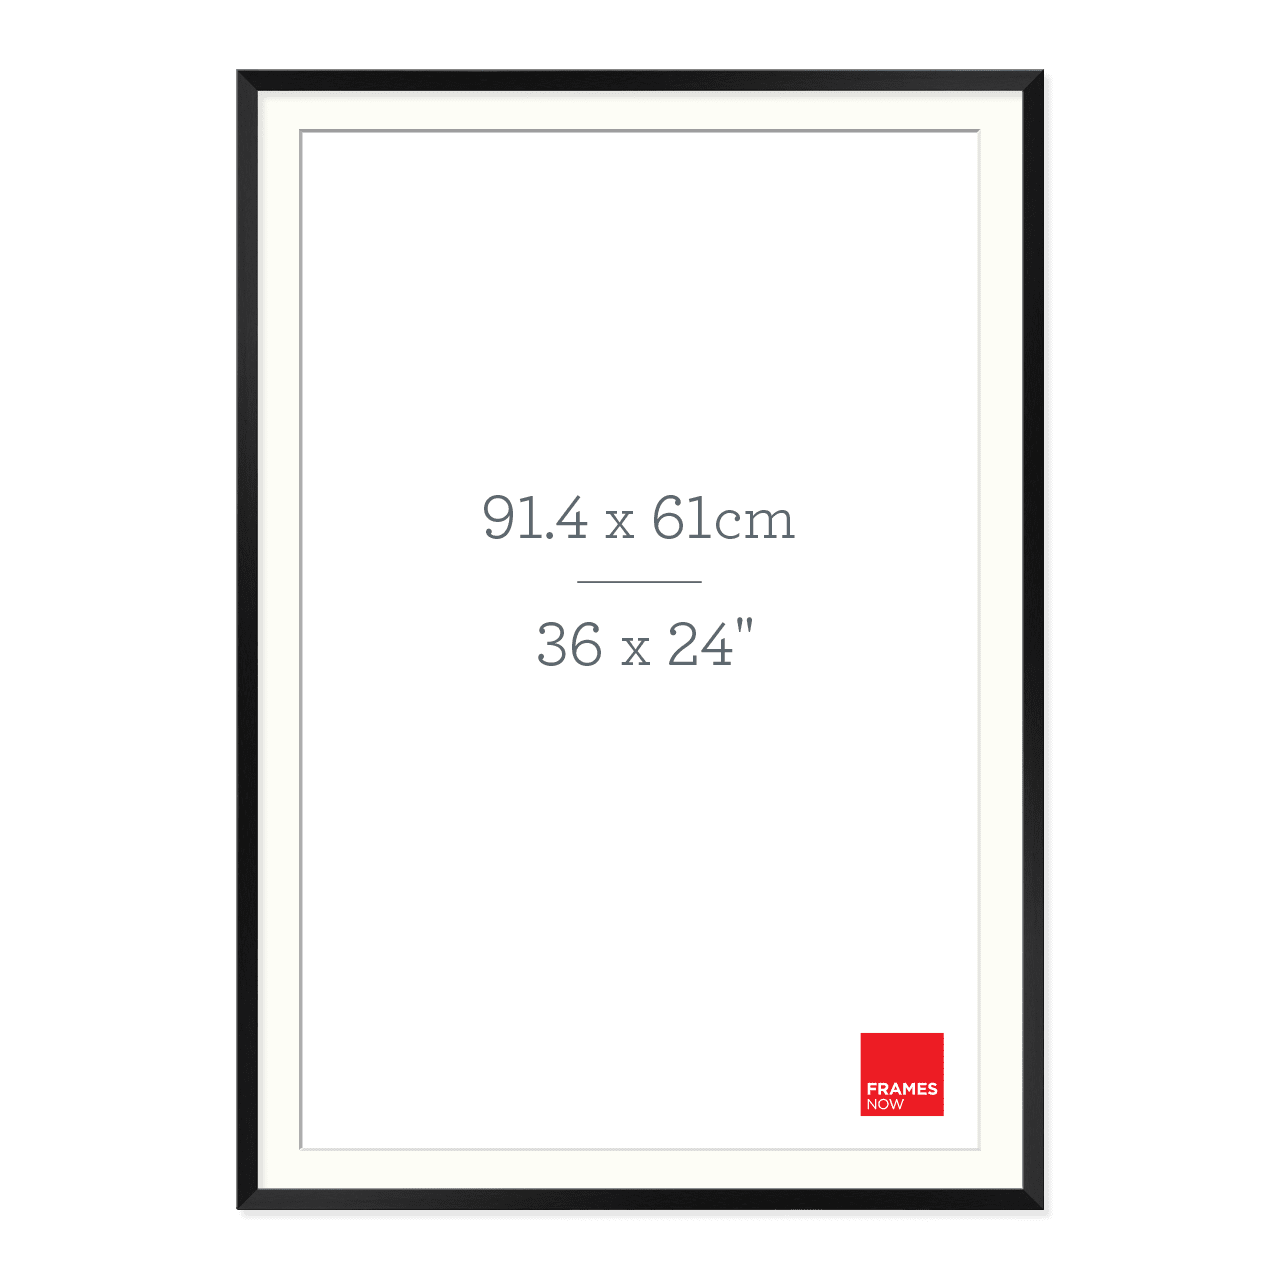 Premium Matte Black Box Picture Frame with Matboard for 91.4 x 61cm Artwork